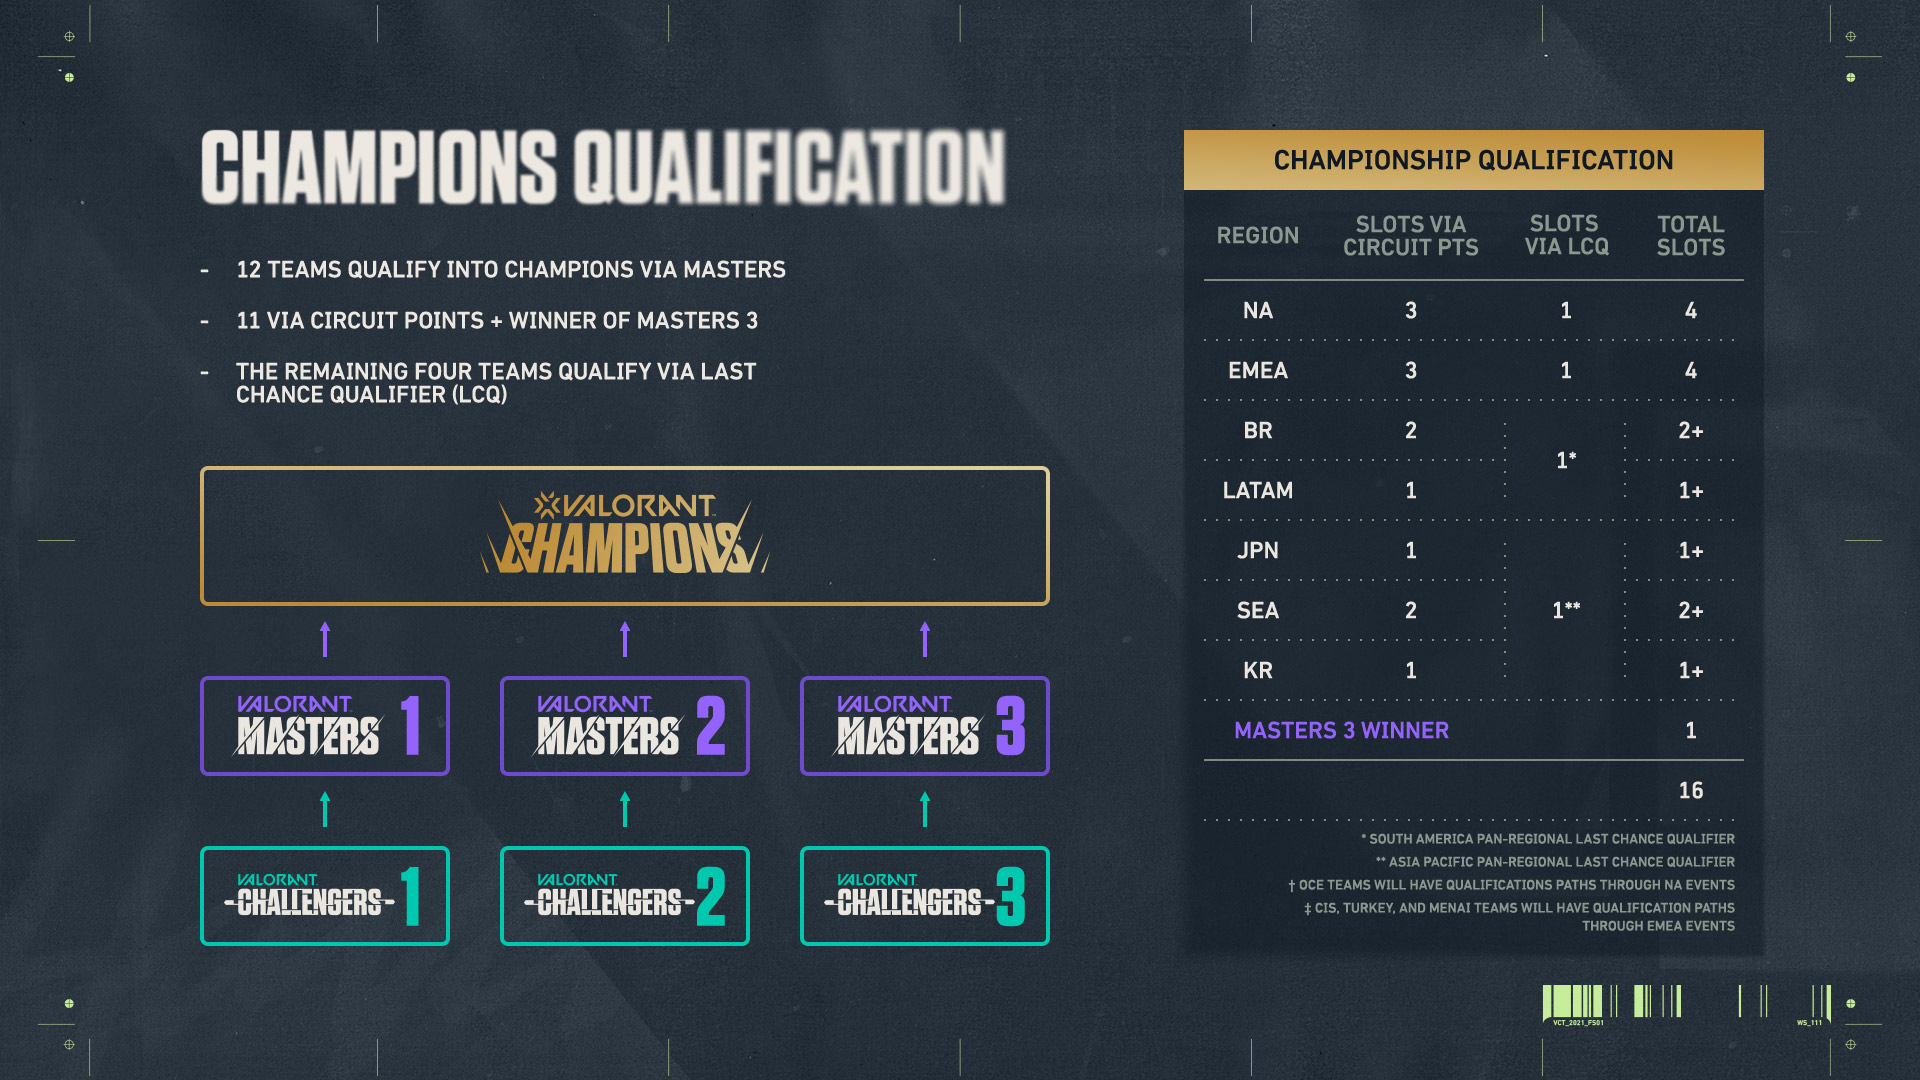 Copy-of-04-championsqualification-v1.jpg